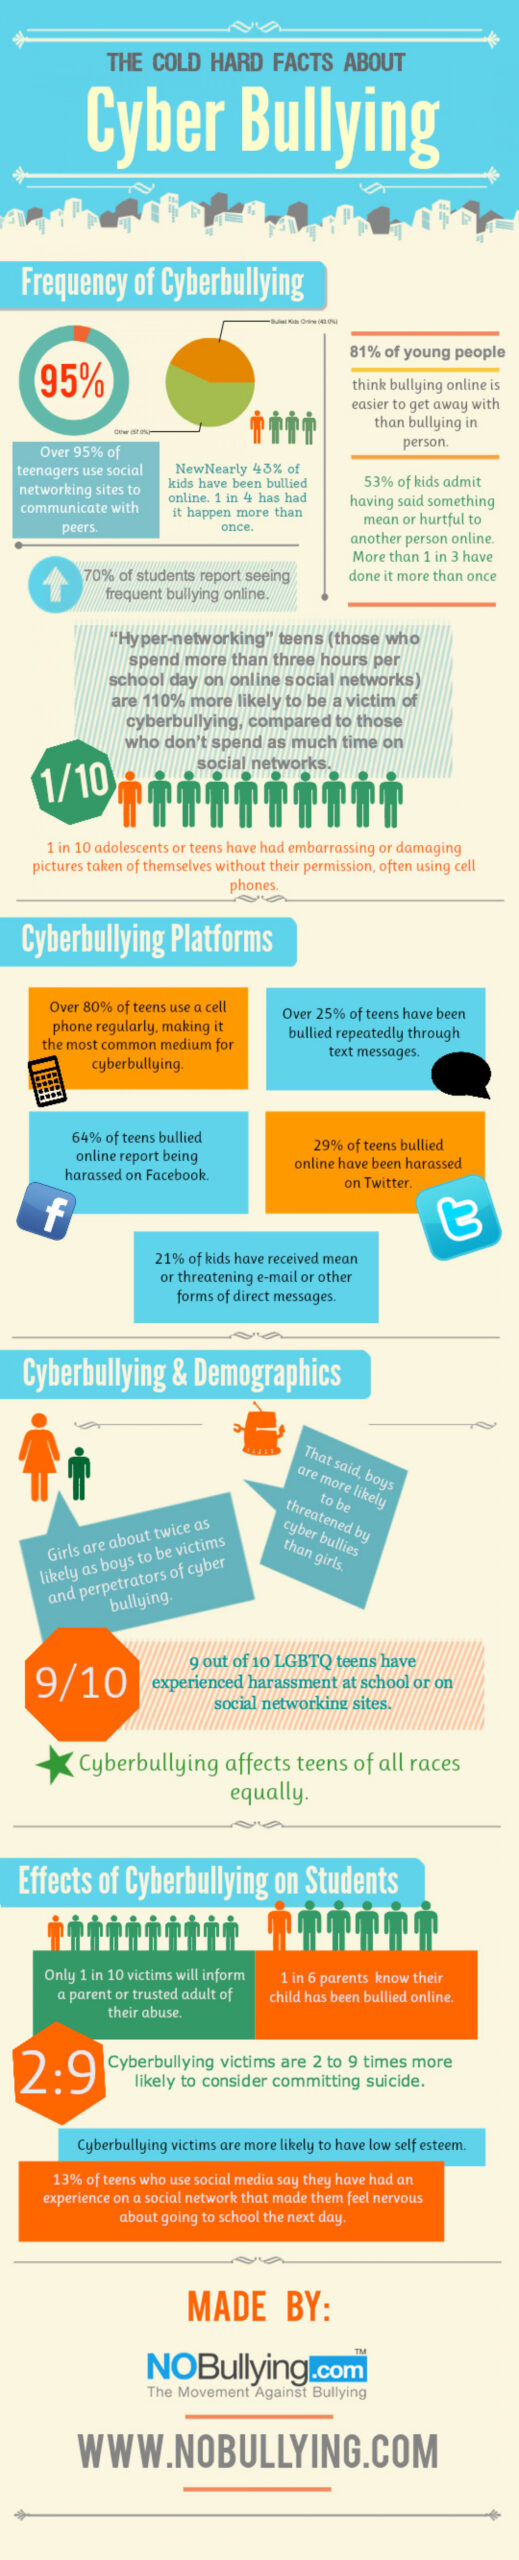 Cyberbullying Statistics 2012 - iNFOGRAPHiCs MANiA